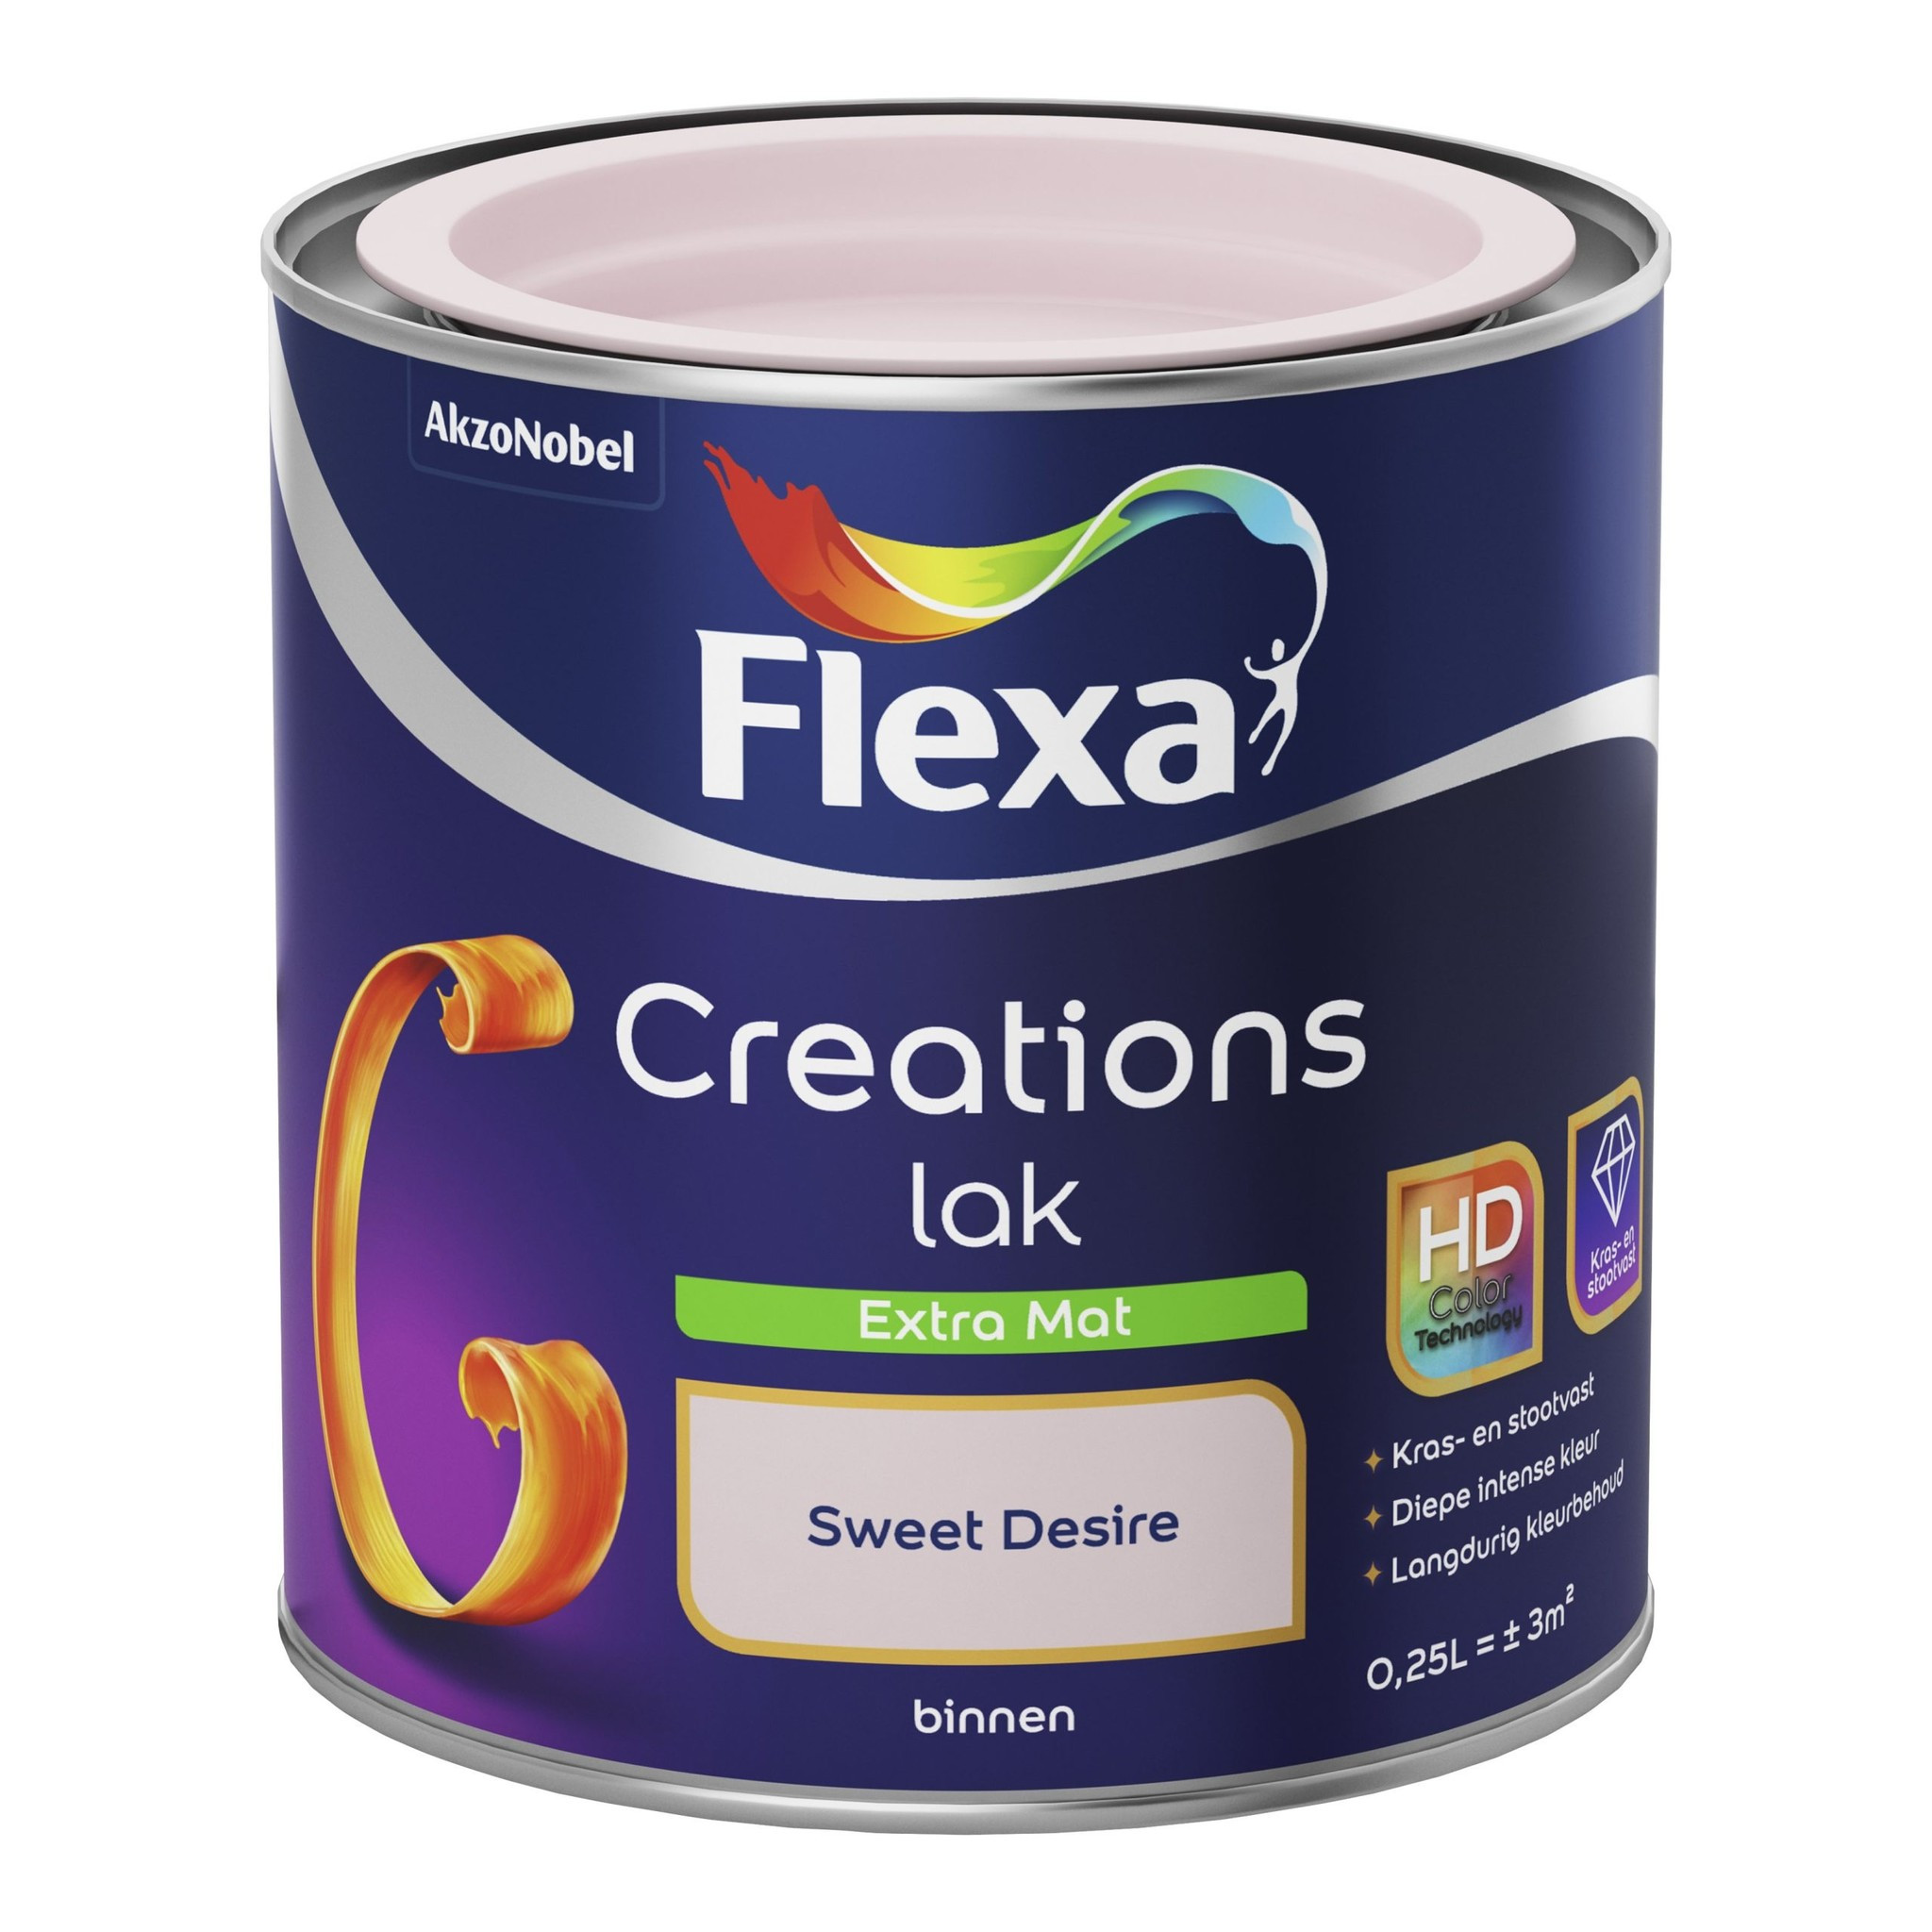 Flexa Creations Lak Extra Mat - Sweet Desire